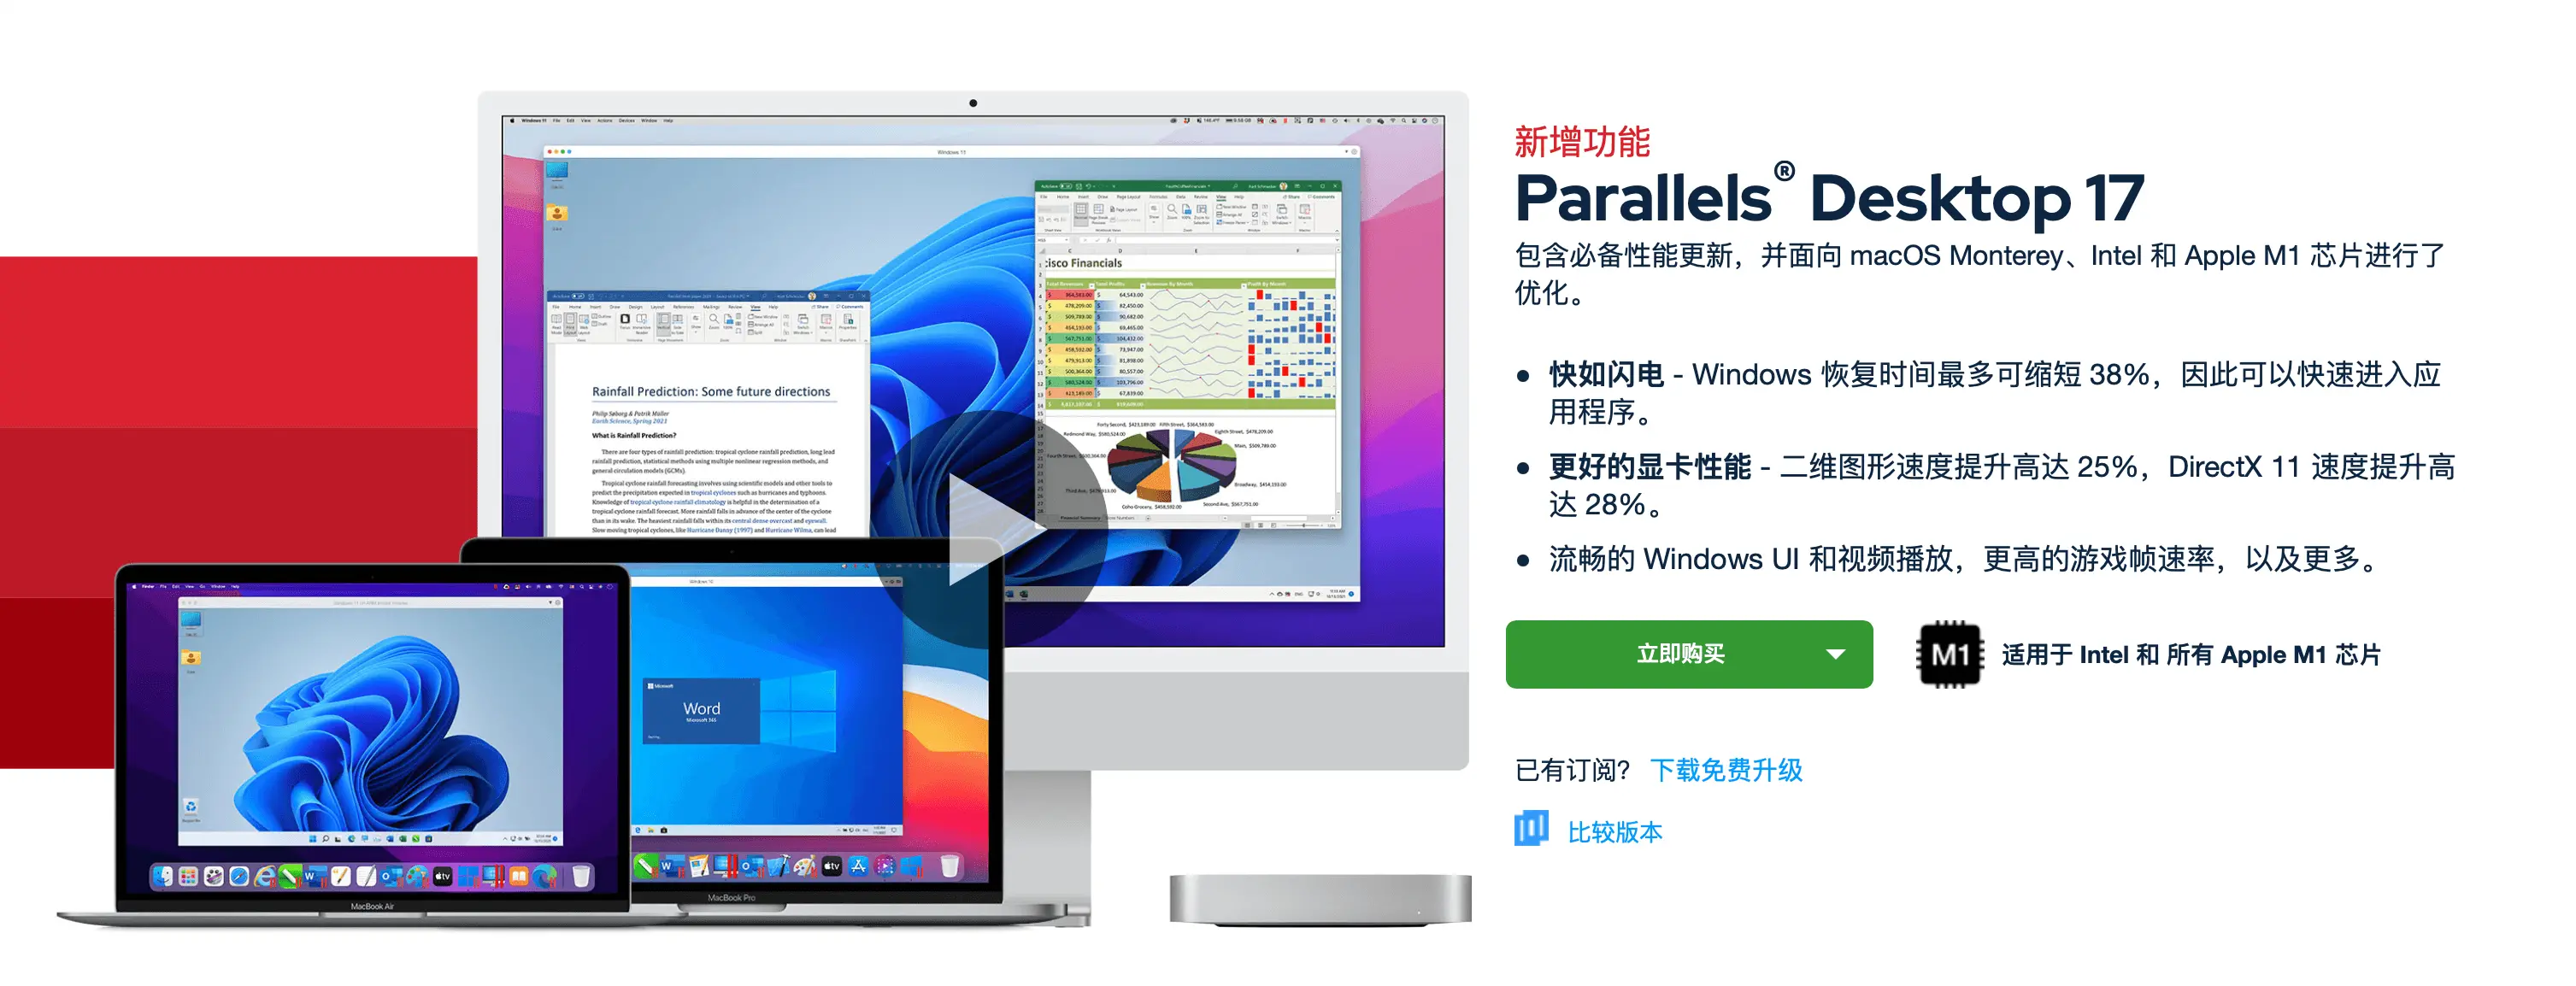 Parallels Desktop 17: Windows 11 和 macOS Monterey 的最佳虚拟机伴侣